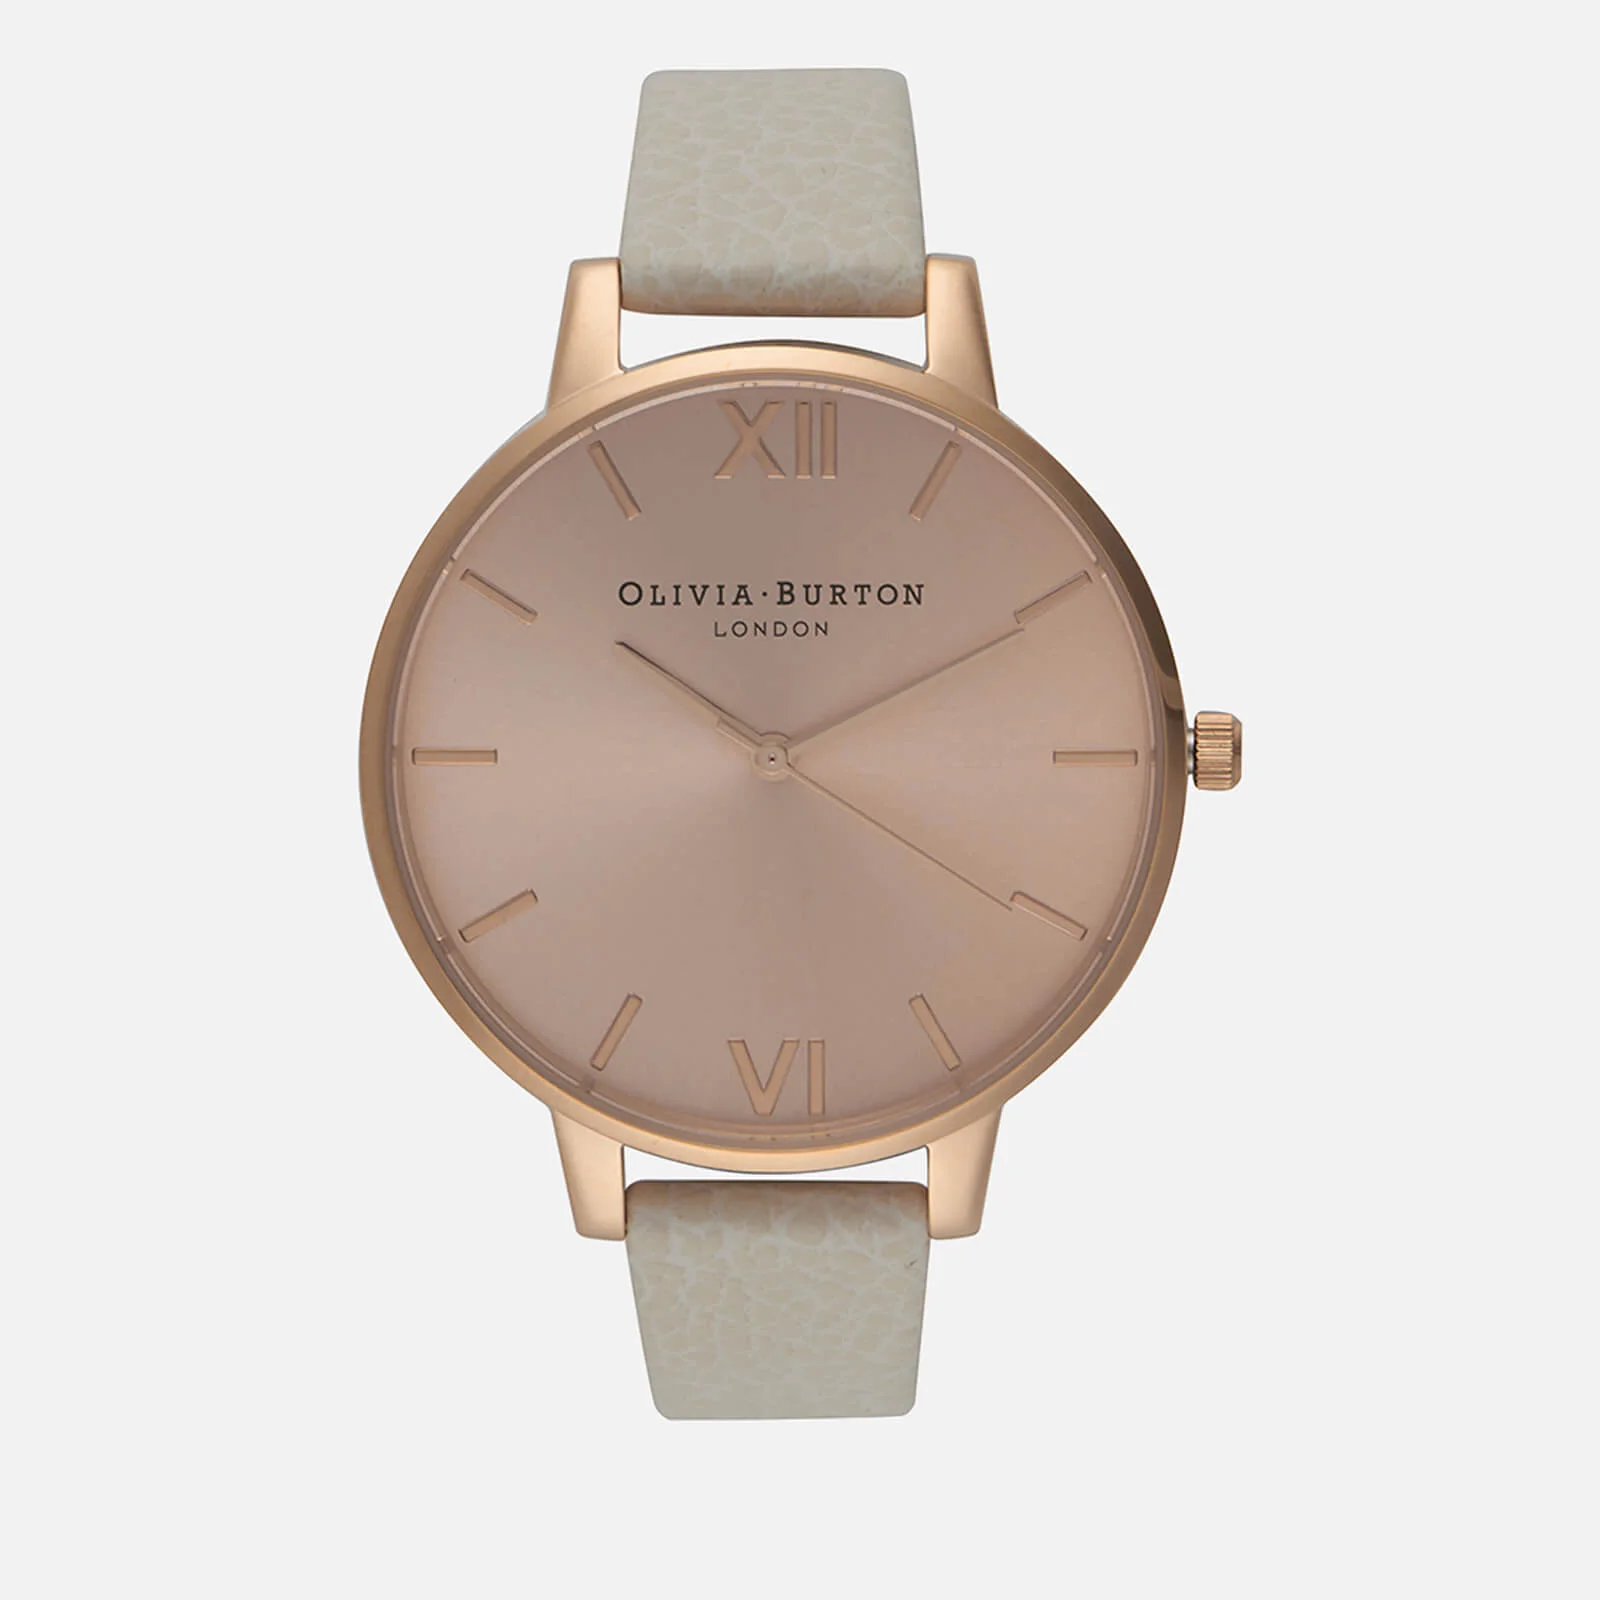 Olivia Burton Women's Big Dial Watch - Mink/Rose Gold Image 1